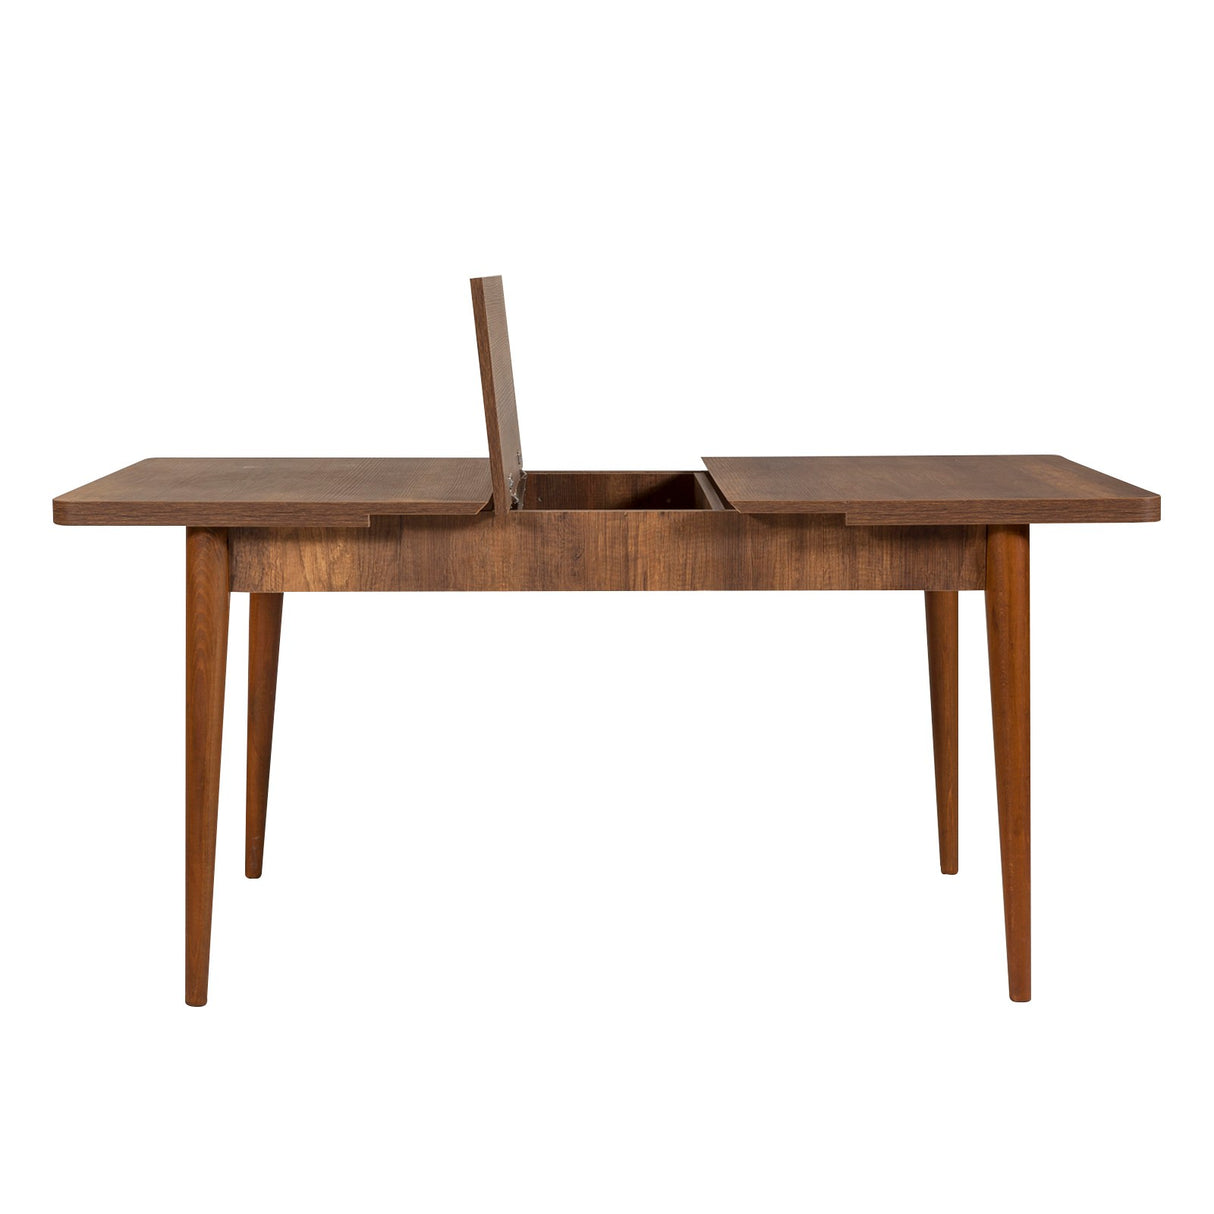 Set masă și scaune extensibile (5 bucăți) Vina 0701 - 4 -
Anthracite,
Atlantic Extendable Dining Table & Chairs Set  13, Nuc, 77x75x120 cm